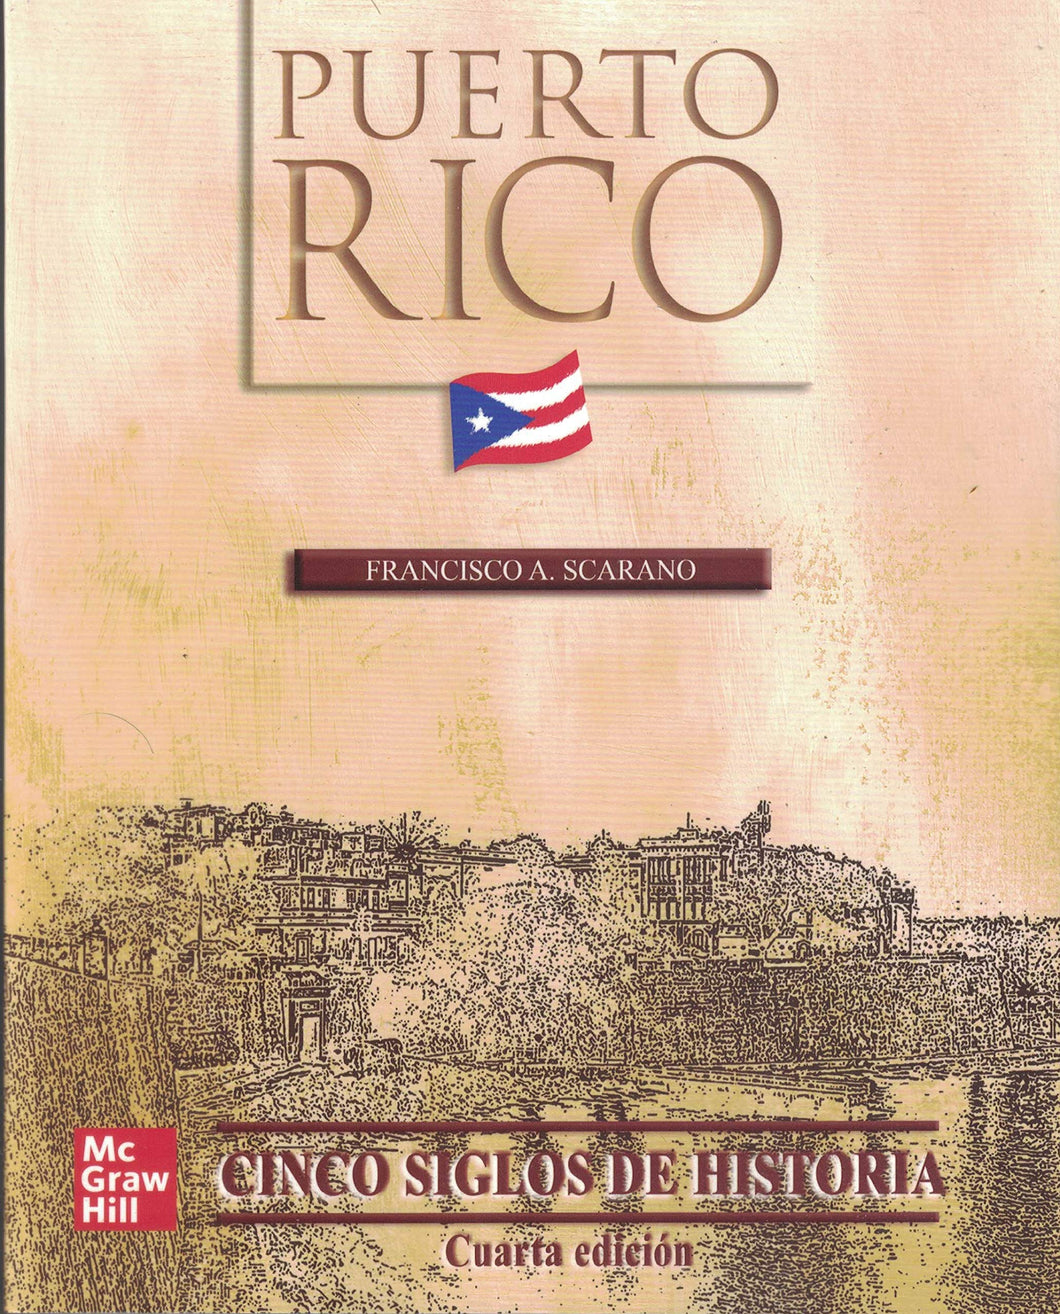 PUERTO RICO CINCO SIGLOS DE HISTORIA - Francisco A. Scarano